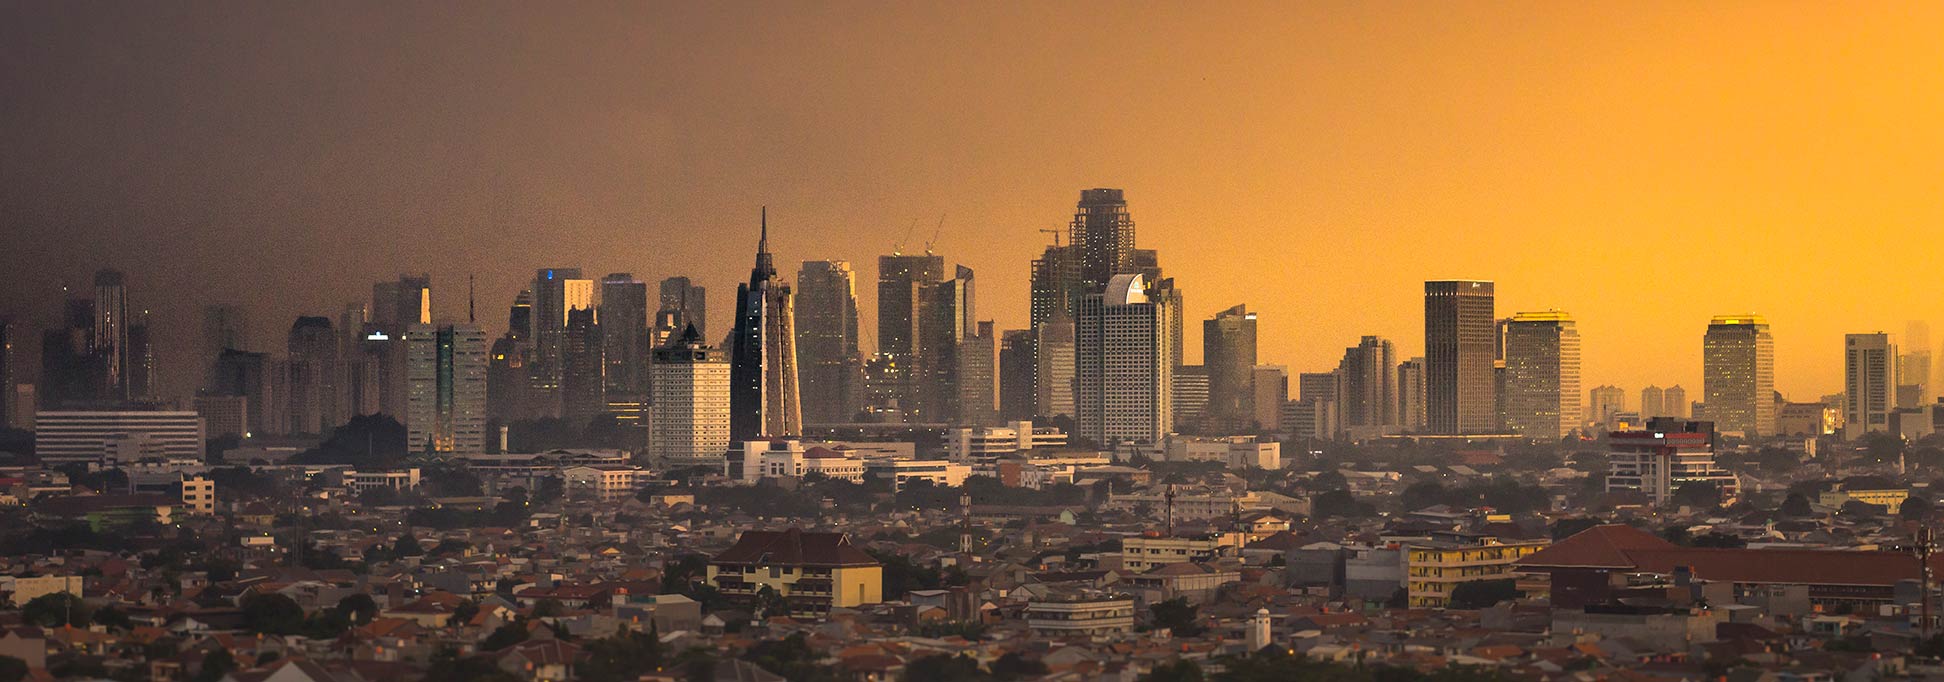 Skyline of Indonesia's capital city Jakarta.